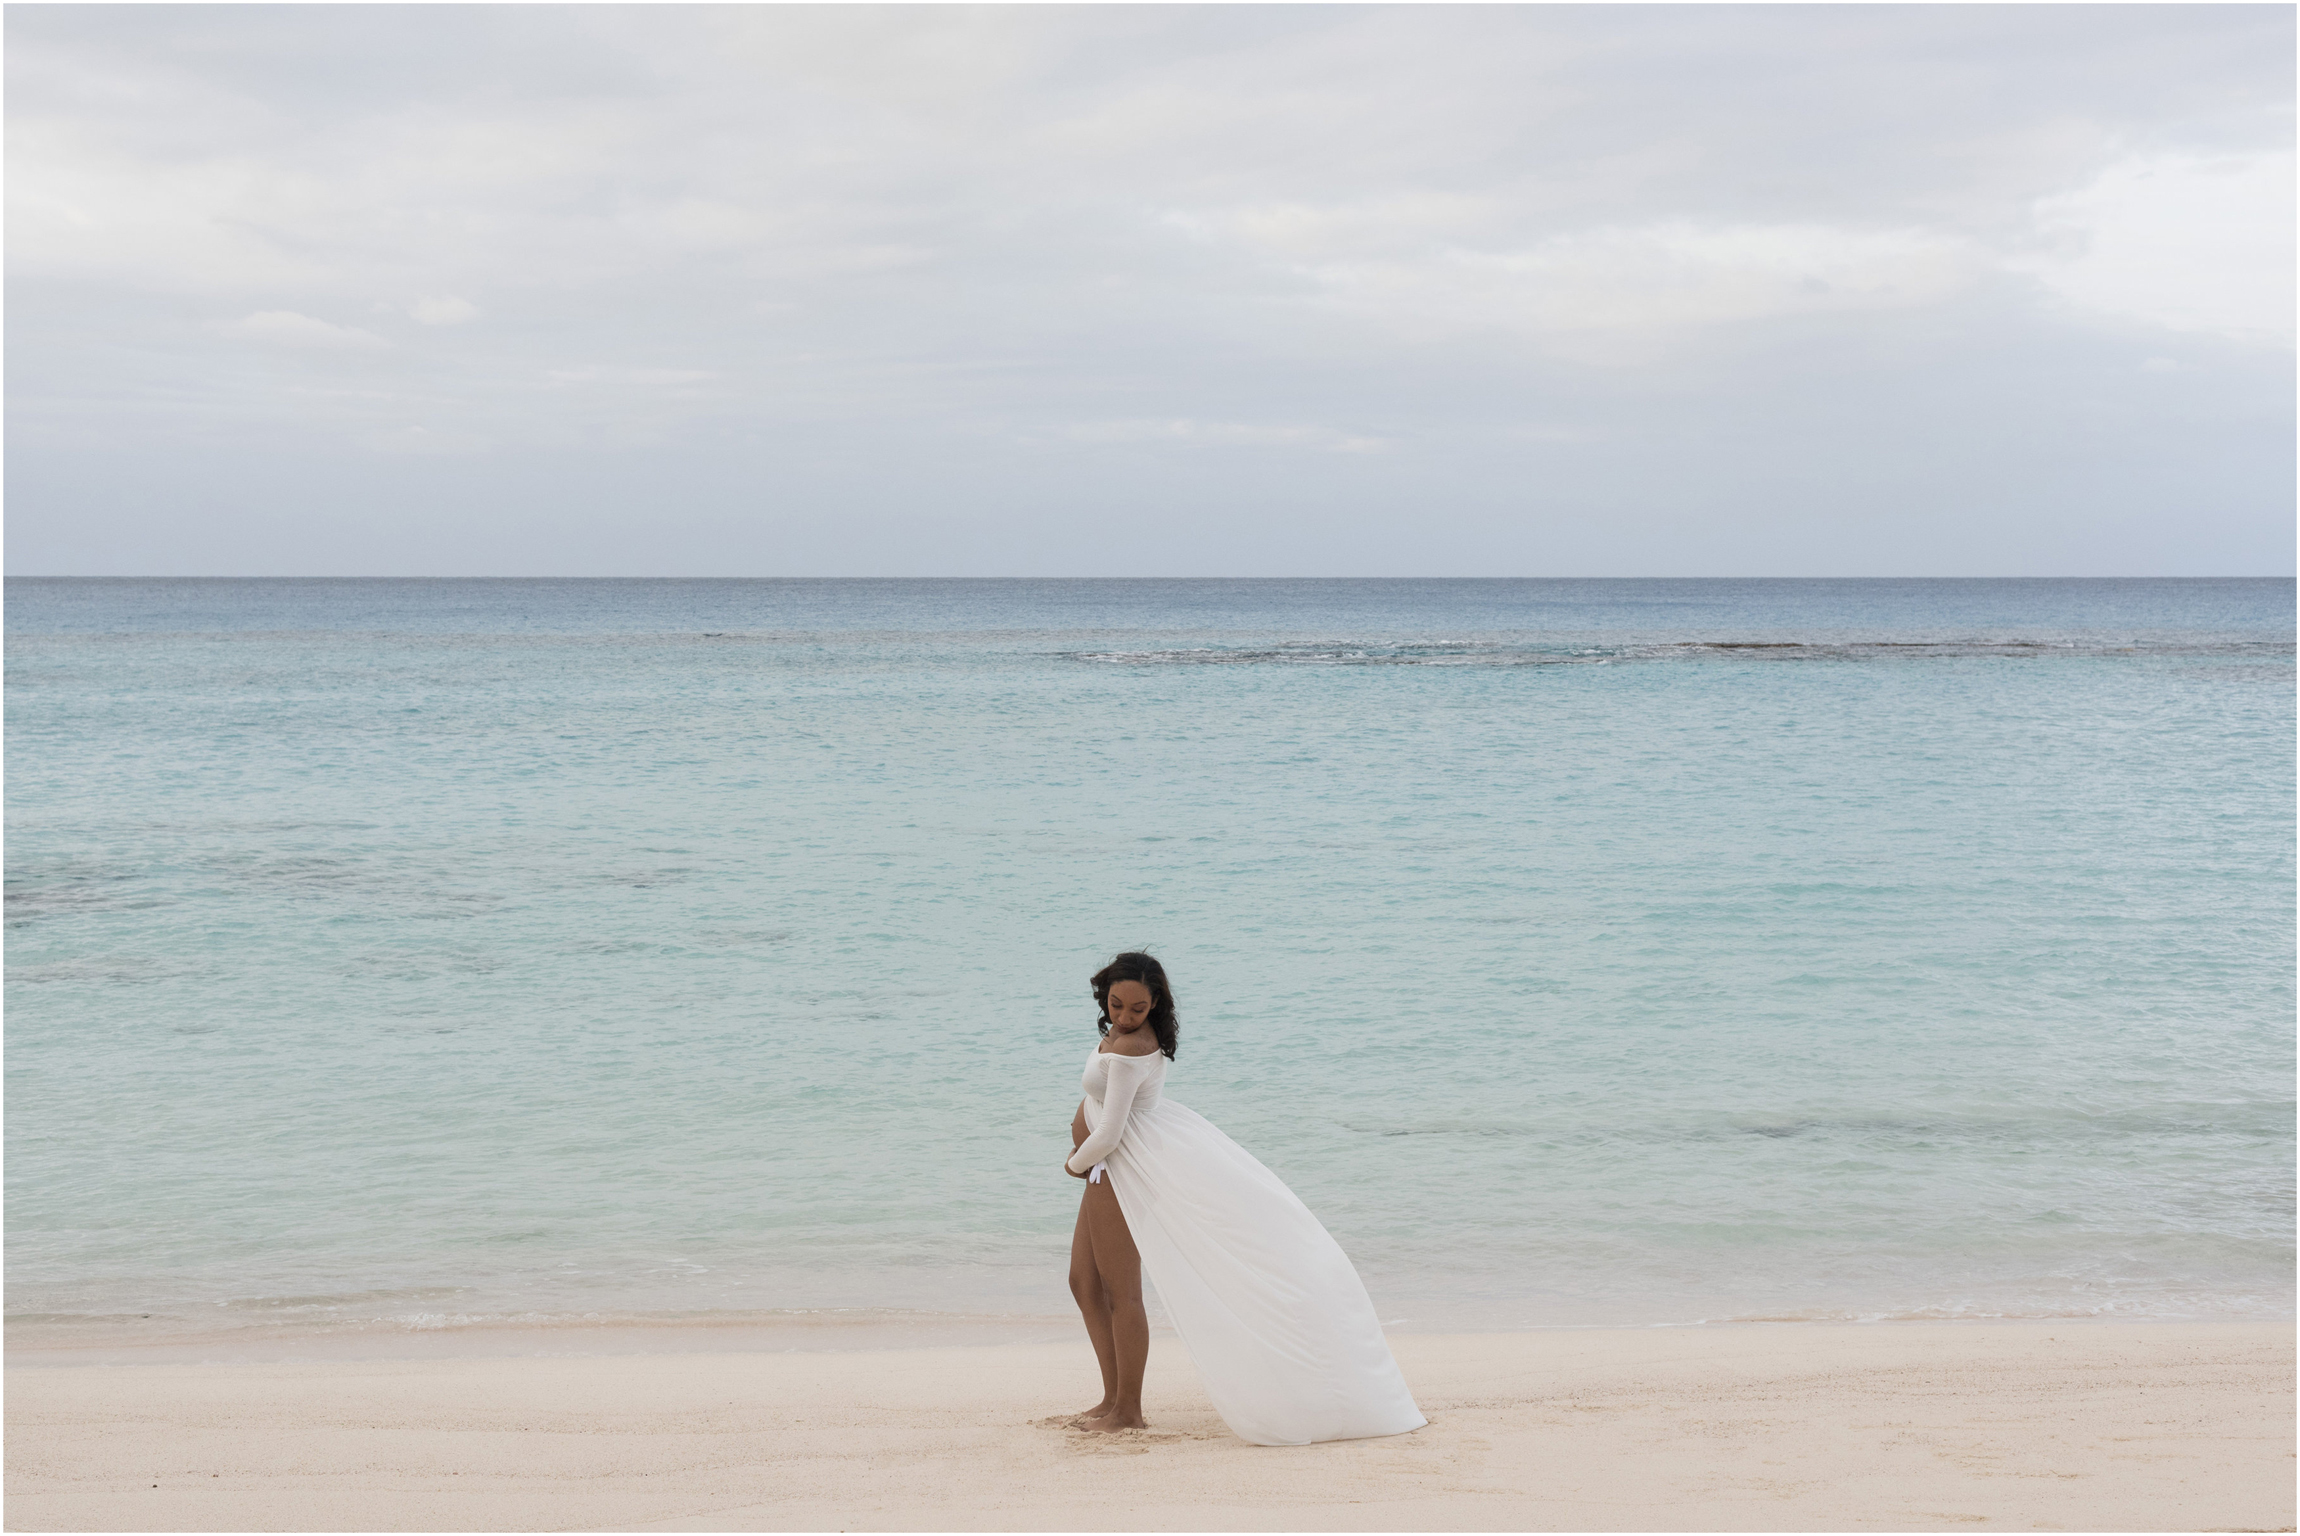 ©FianderFoto_Bermuda Maternity Photographer_Church Bay Beach_Tiffany_005.jpg